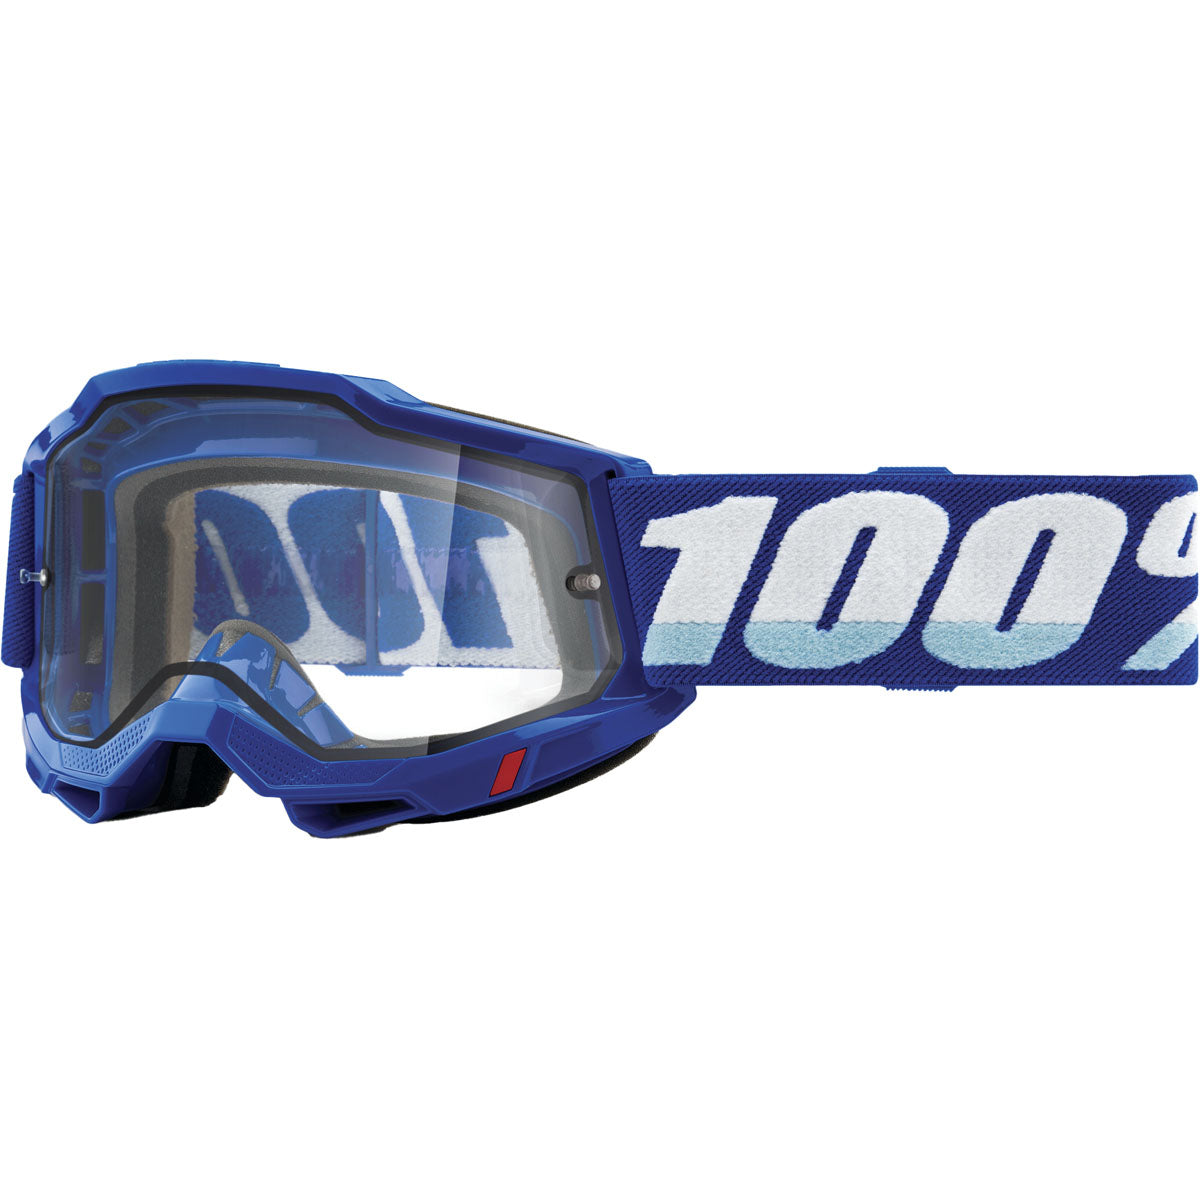 100% Accuri 2 Enduro Moto Goggles Blue / Clear Lens